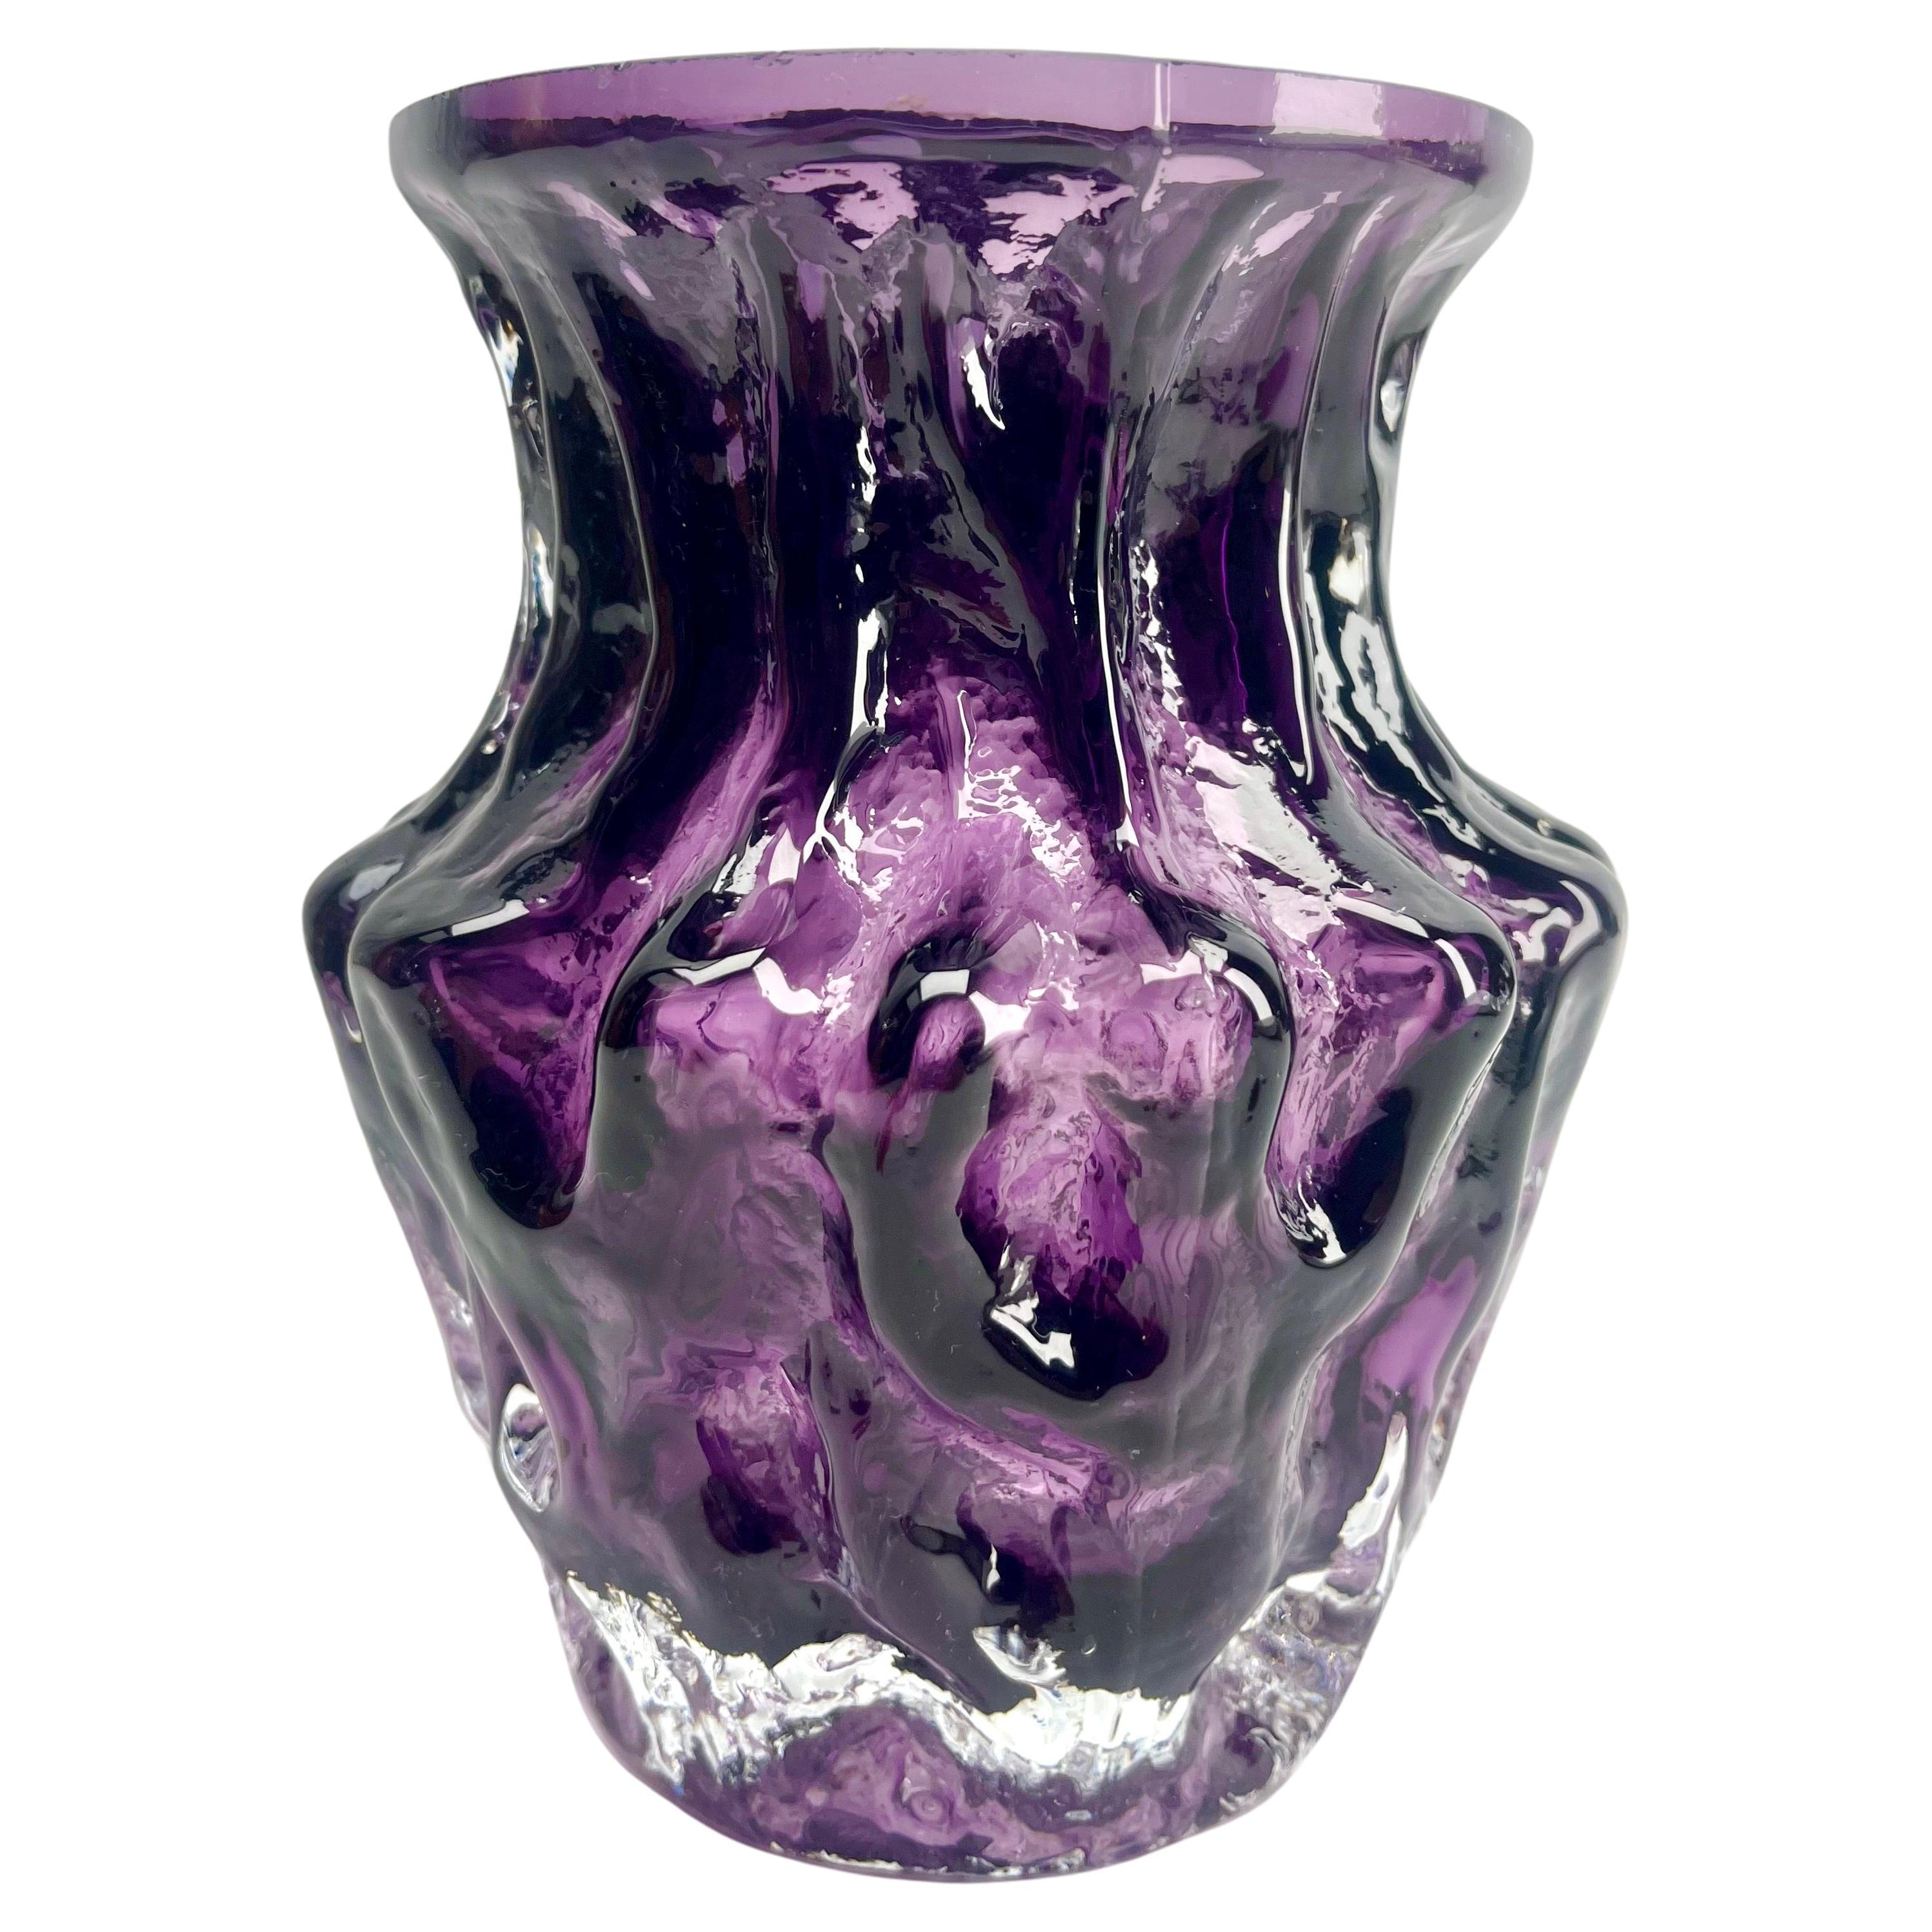 Ingrid Glas ‘Germany’ Bark Vase in Purple, 1970s For Sale